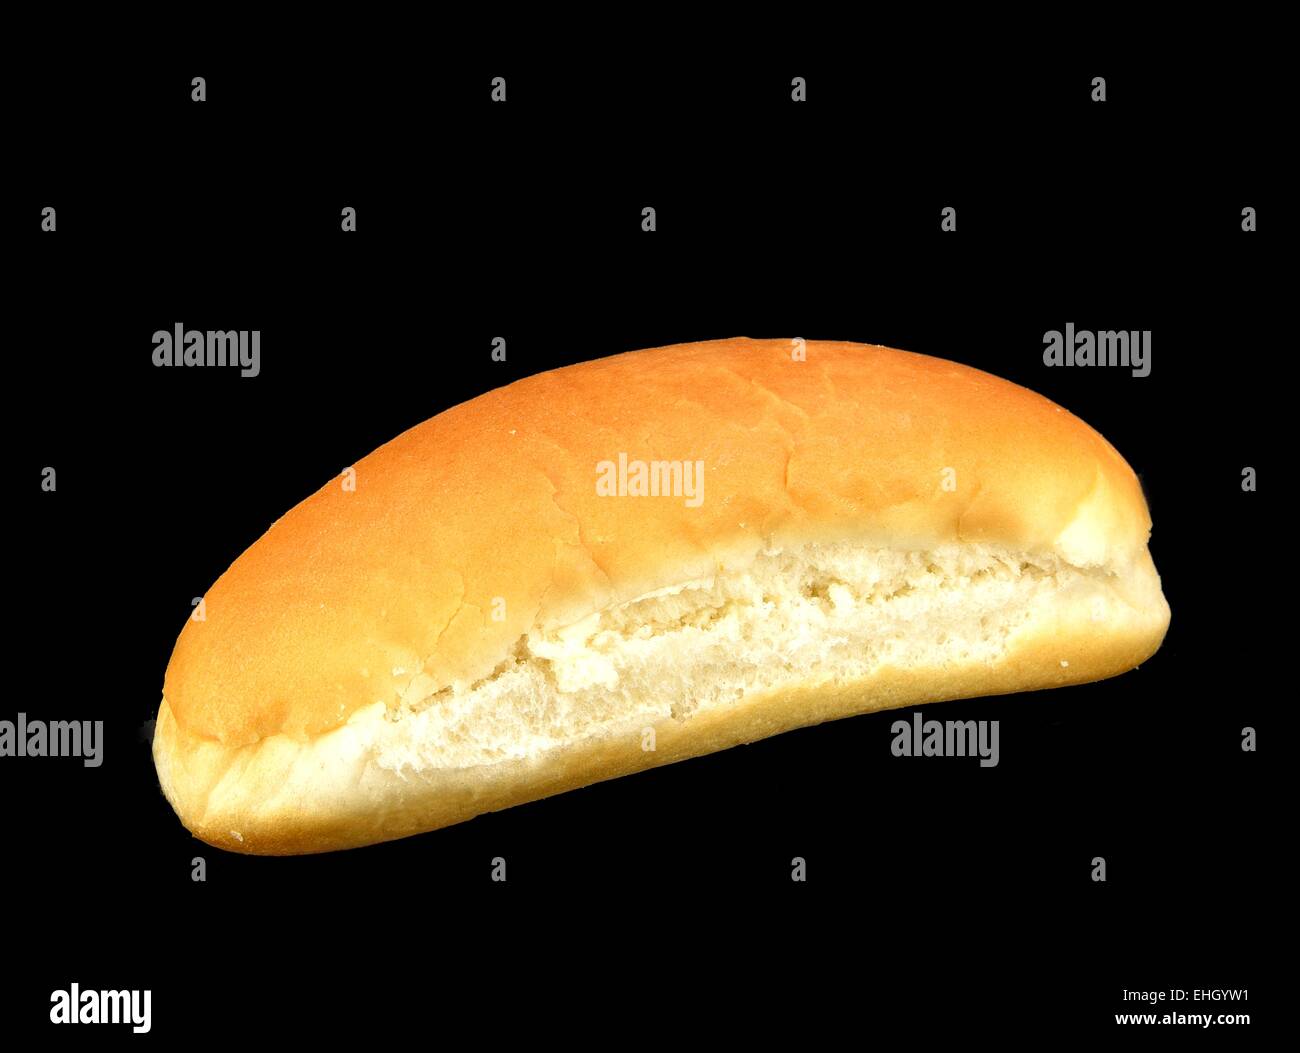 Hot dog bun on a black background. Stock Photo